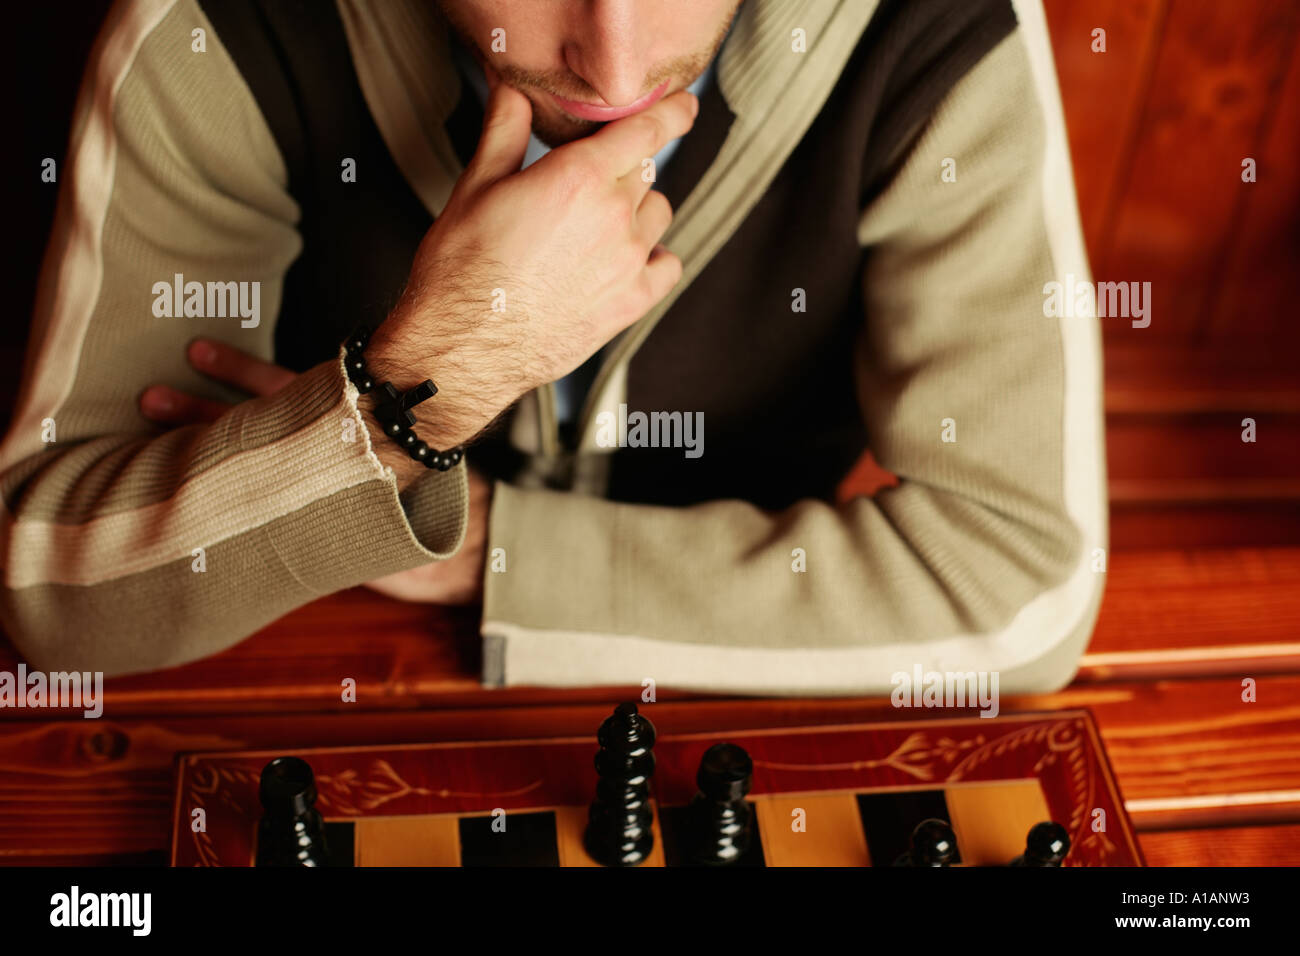 Man contemplating chess move Stock Photo